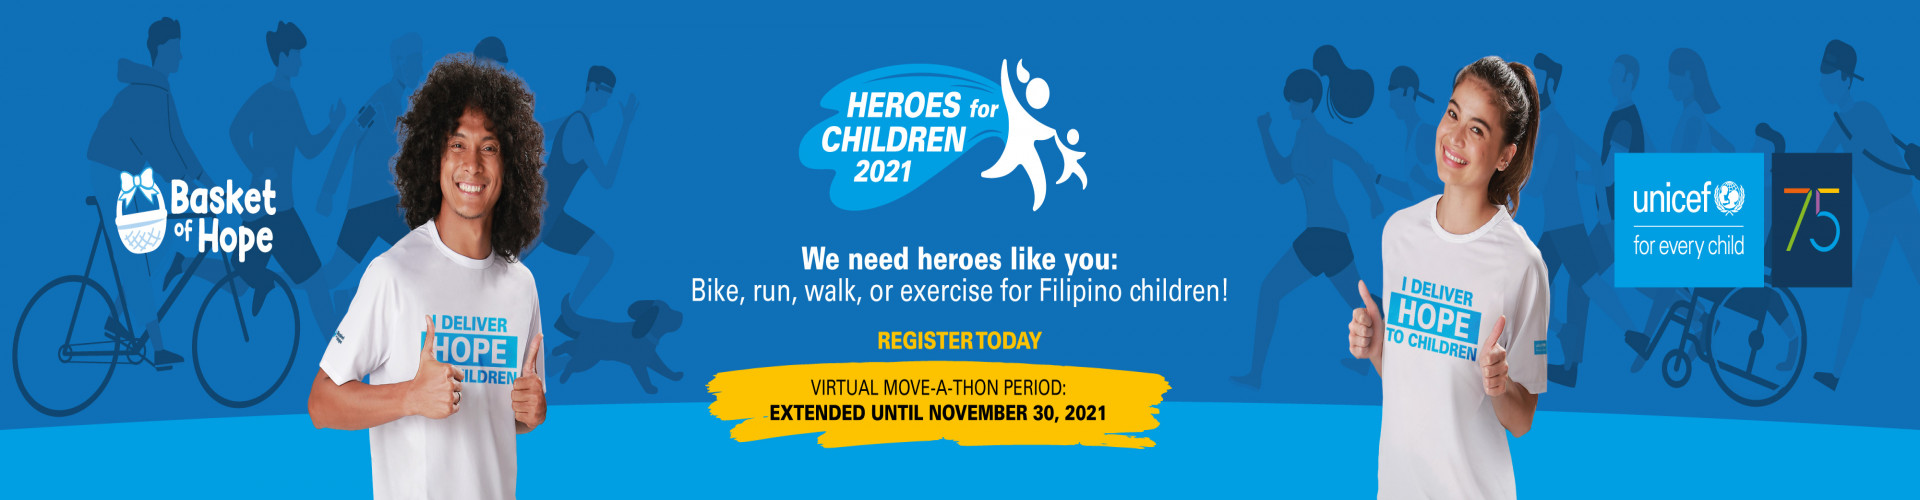 Unicef Heroes for Children 2021